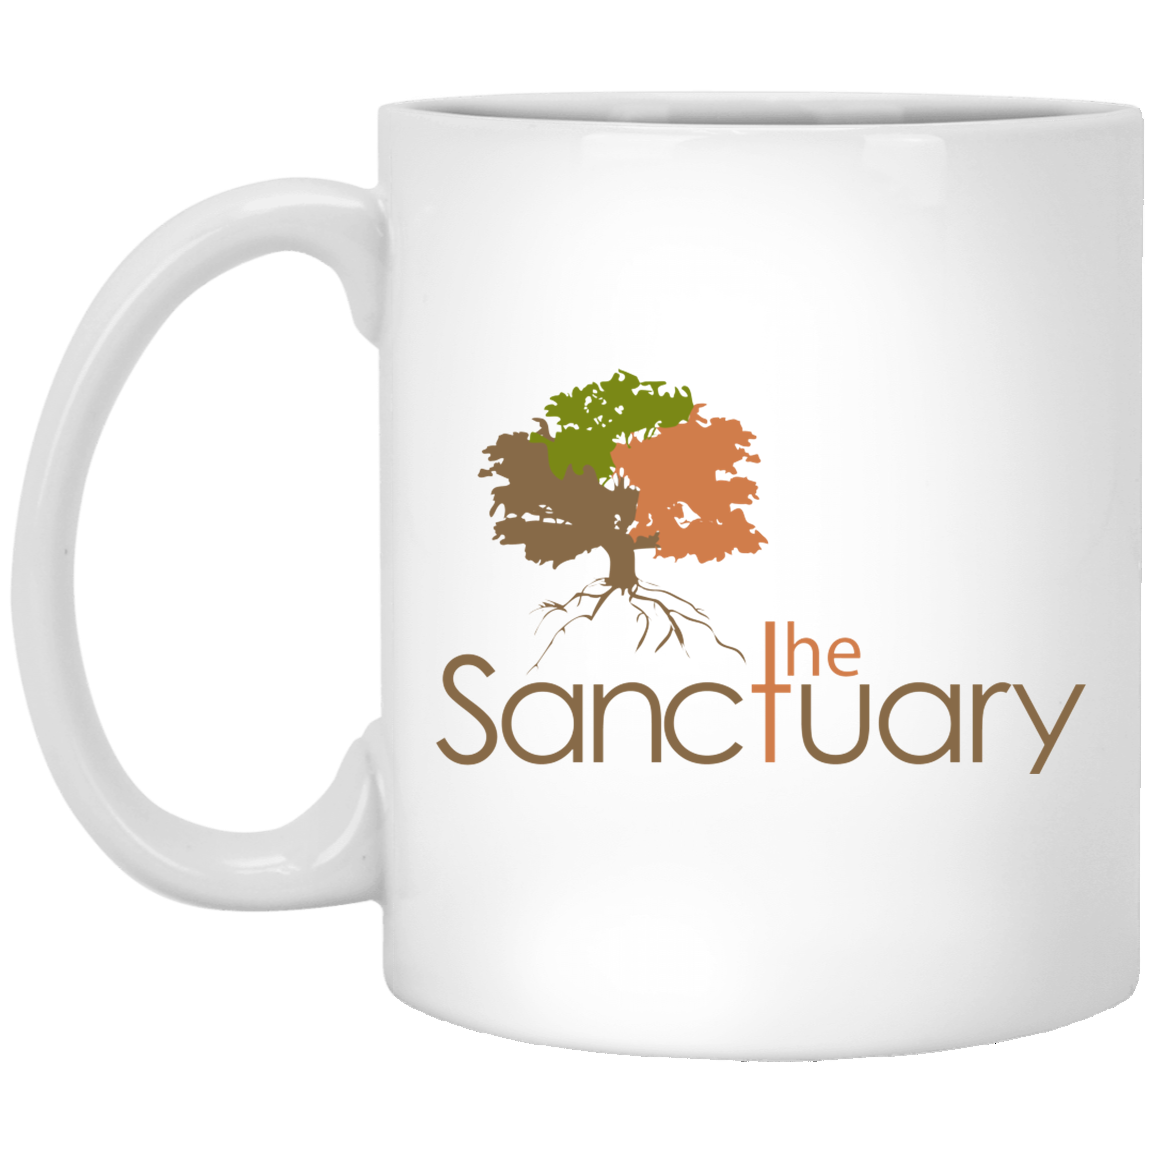 The Sanctuary - 11 oz. White Mug